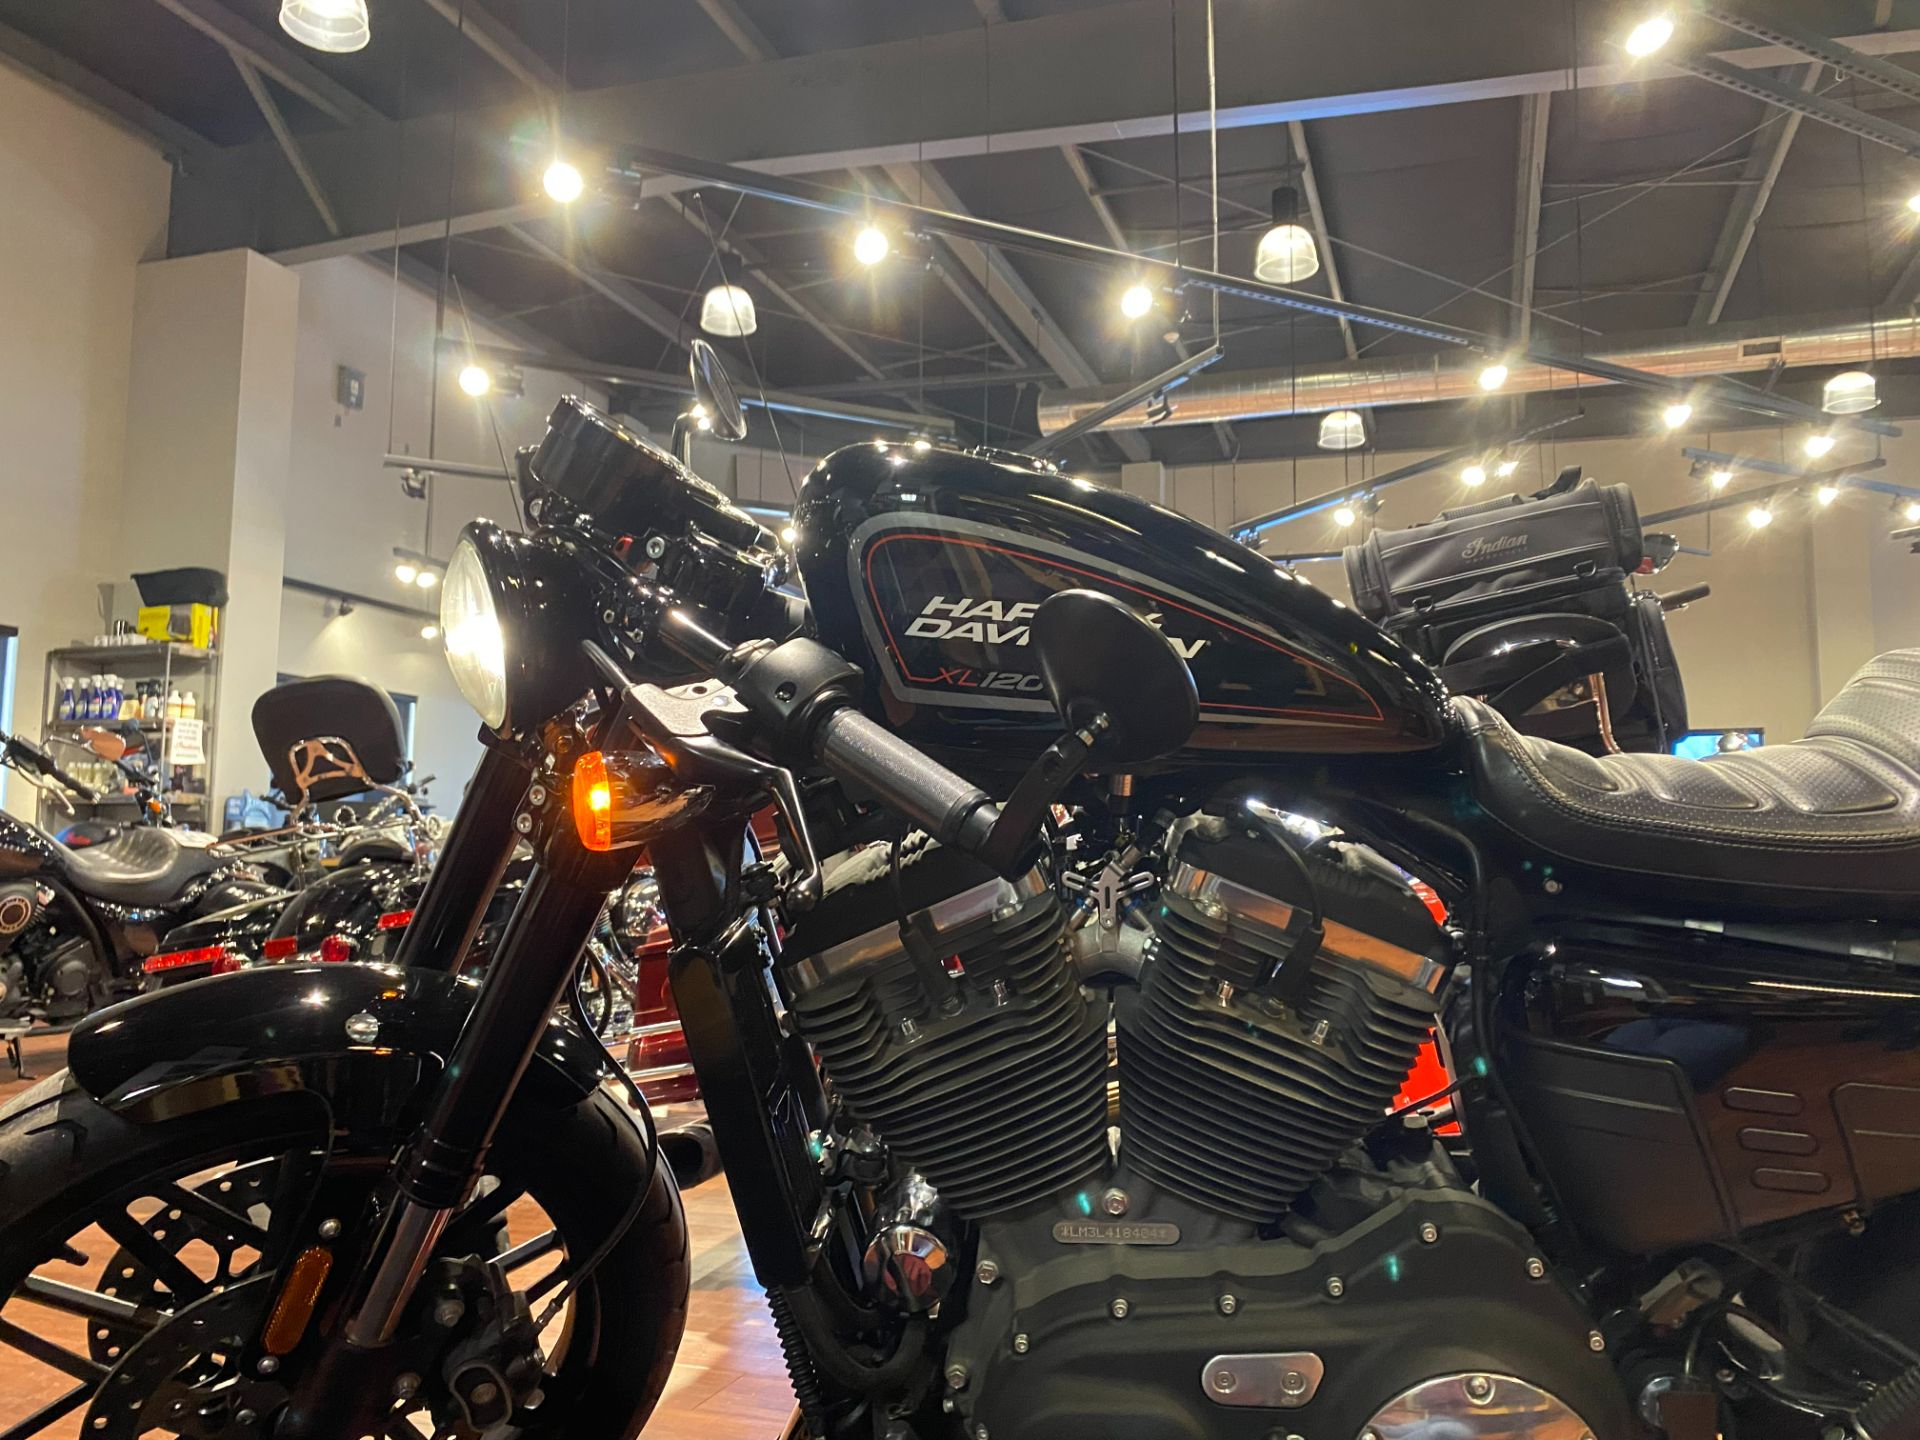 2020 Harley-Davidson Roadster™ in Elkhart, Indiana - Photo 2